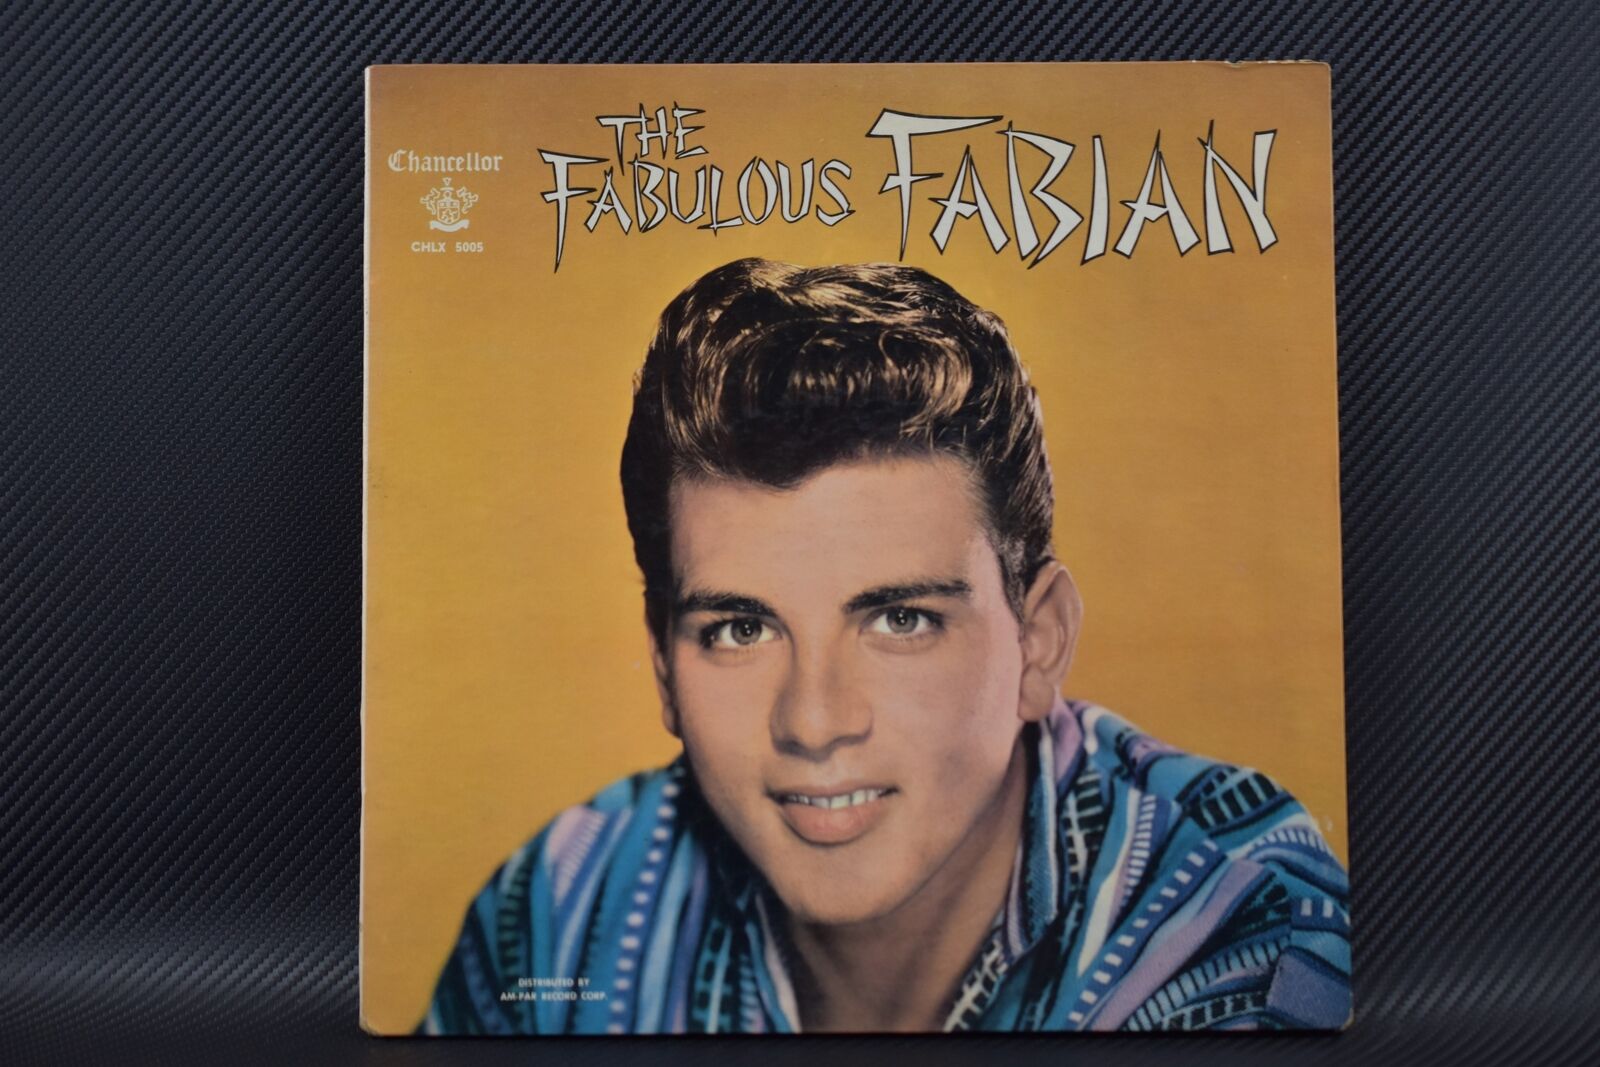 Vtg Vinyl Record Album The Fabulous Fabian Chancellor CHLX 5005